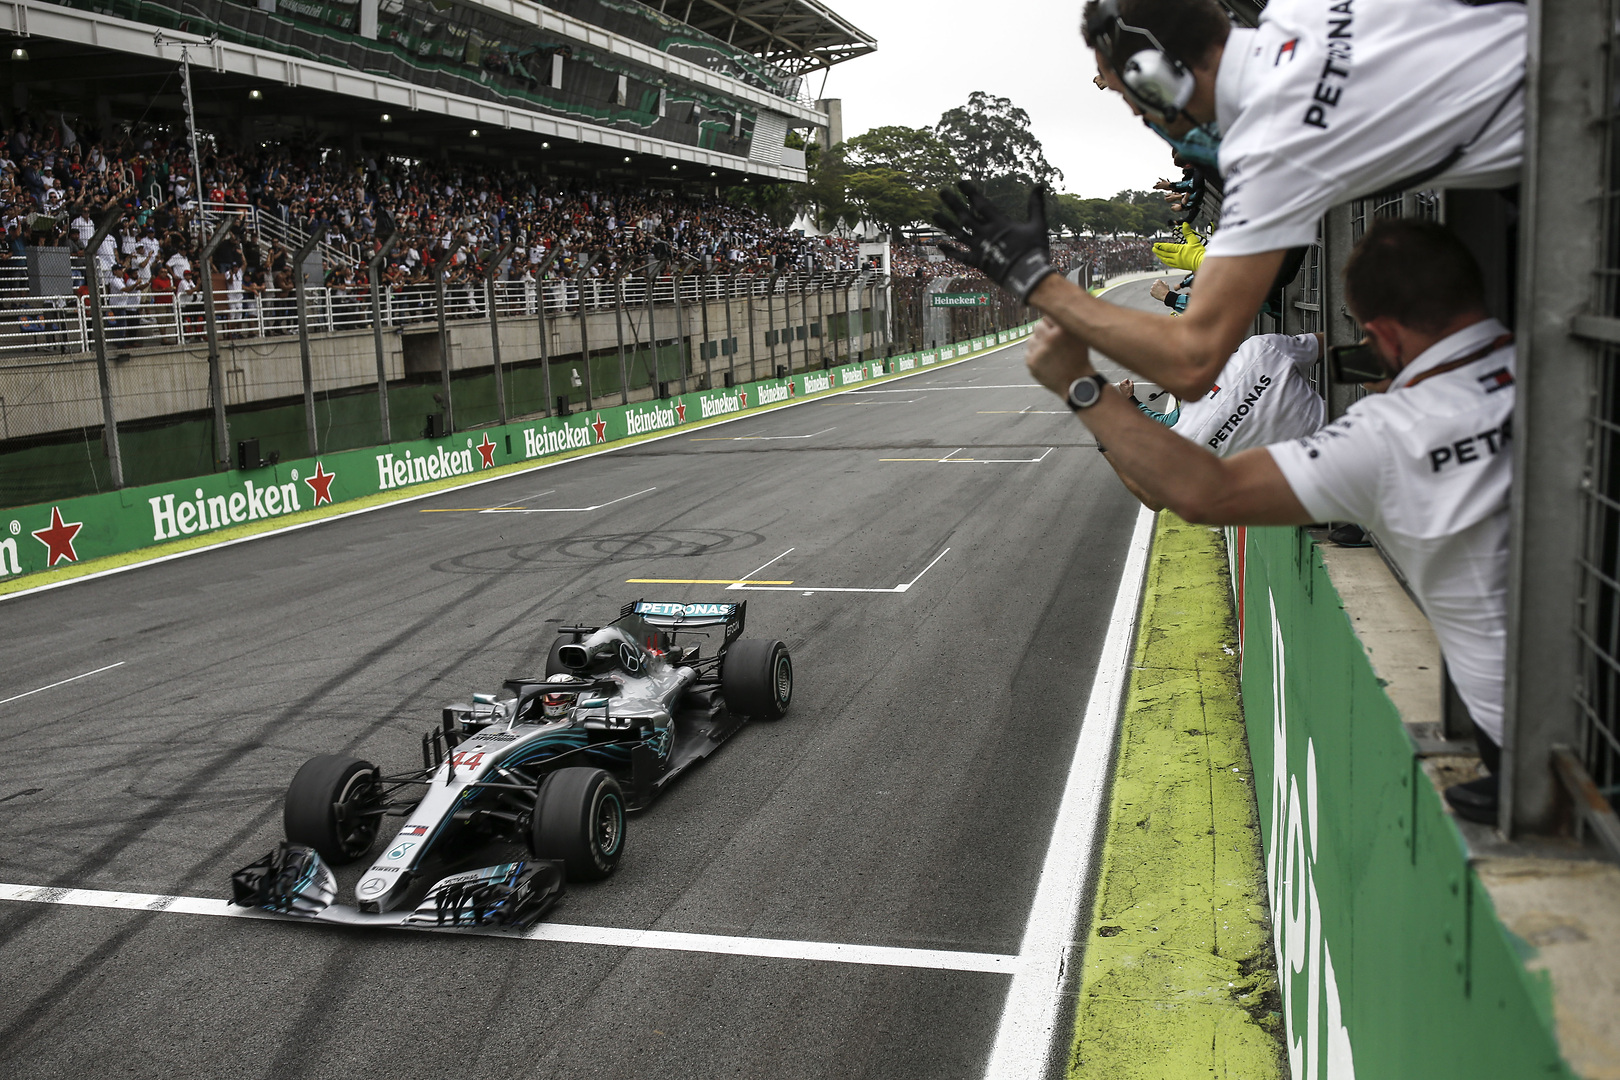 The Mercedes team celebrates victory at the 2018 Brazilian GP at Interlagos